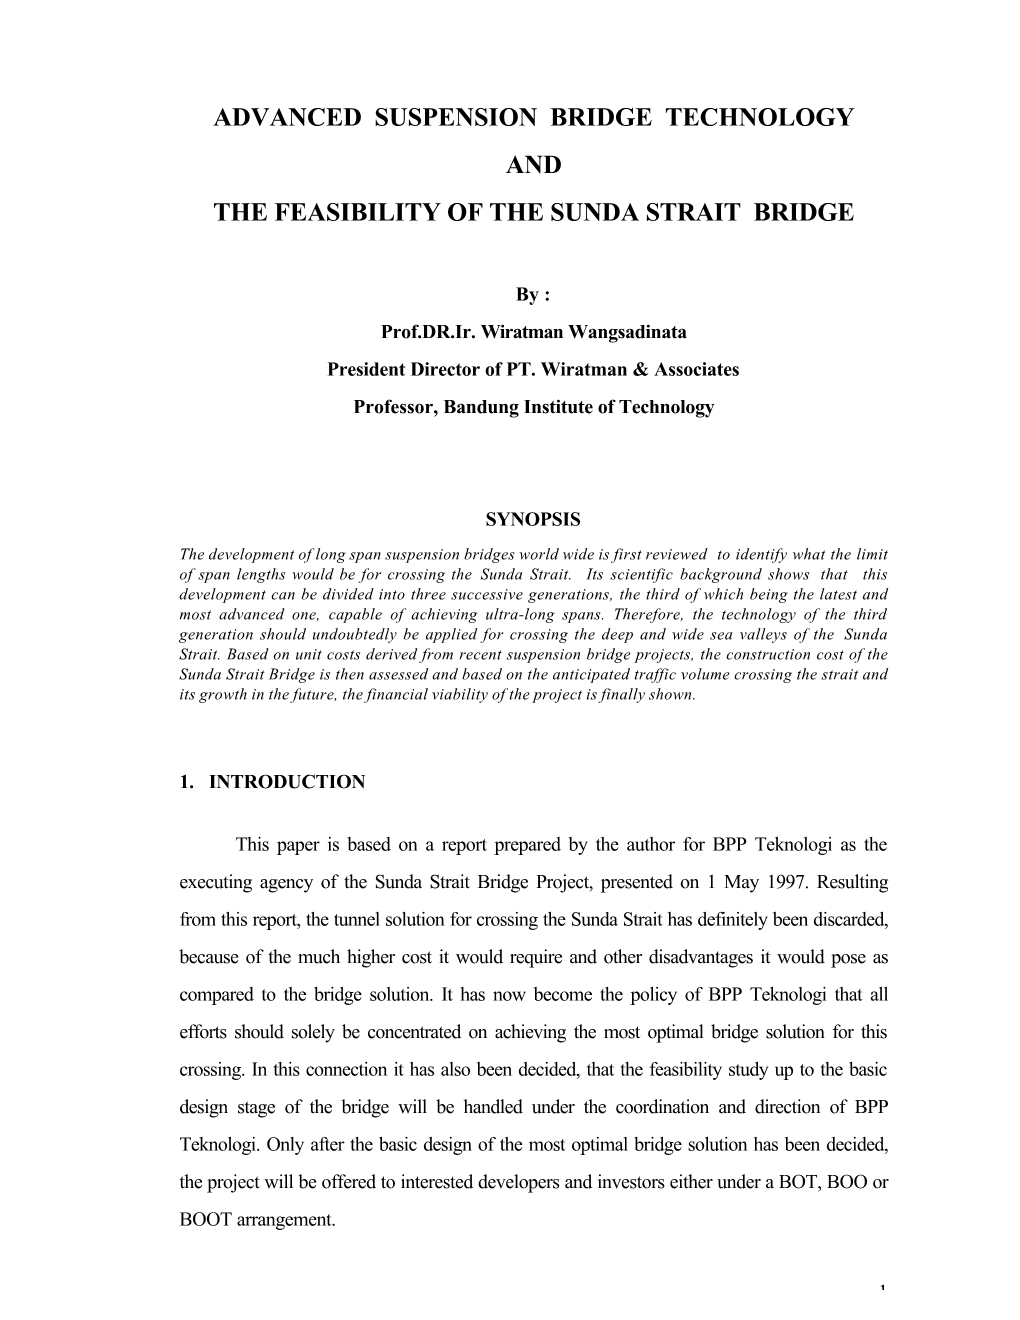 Advanced Suspension Bridge Technology and the Feasibility of the Sunda Strait Bridge